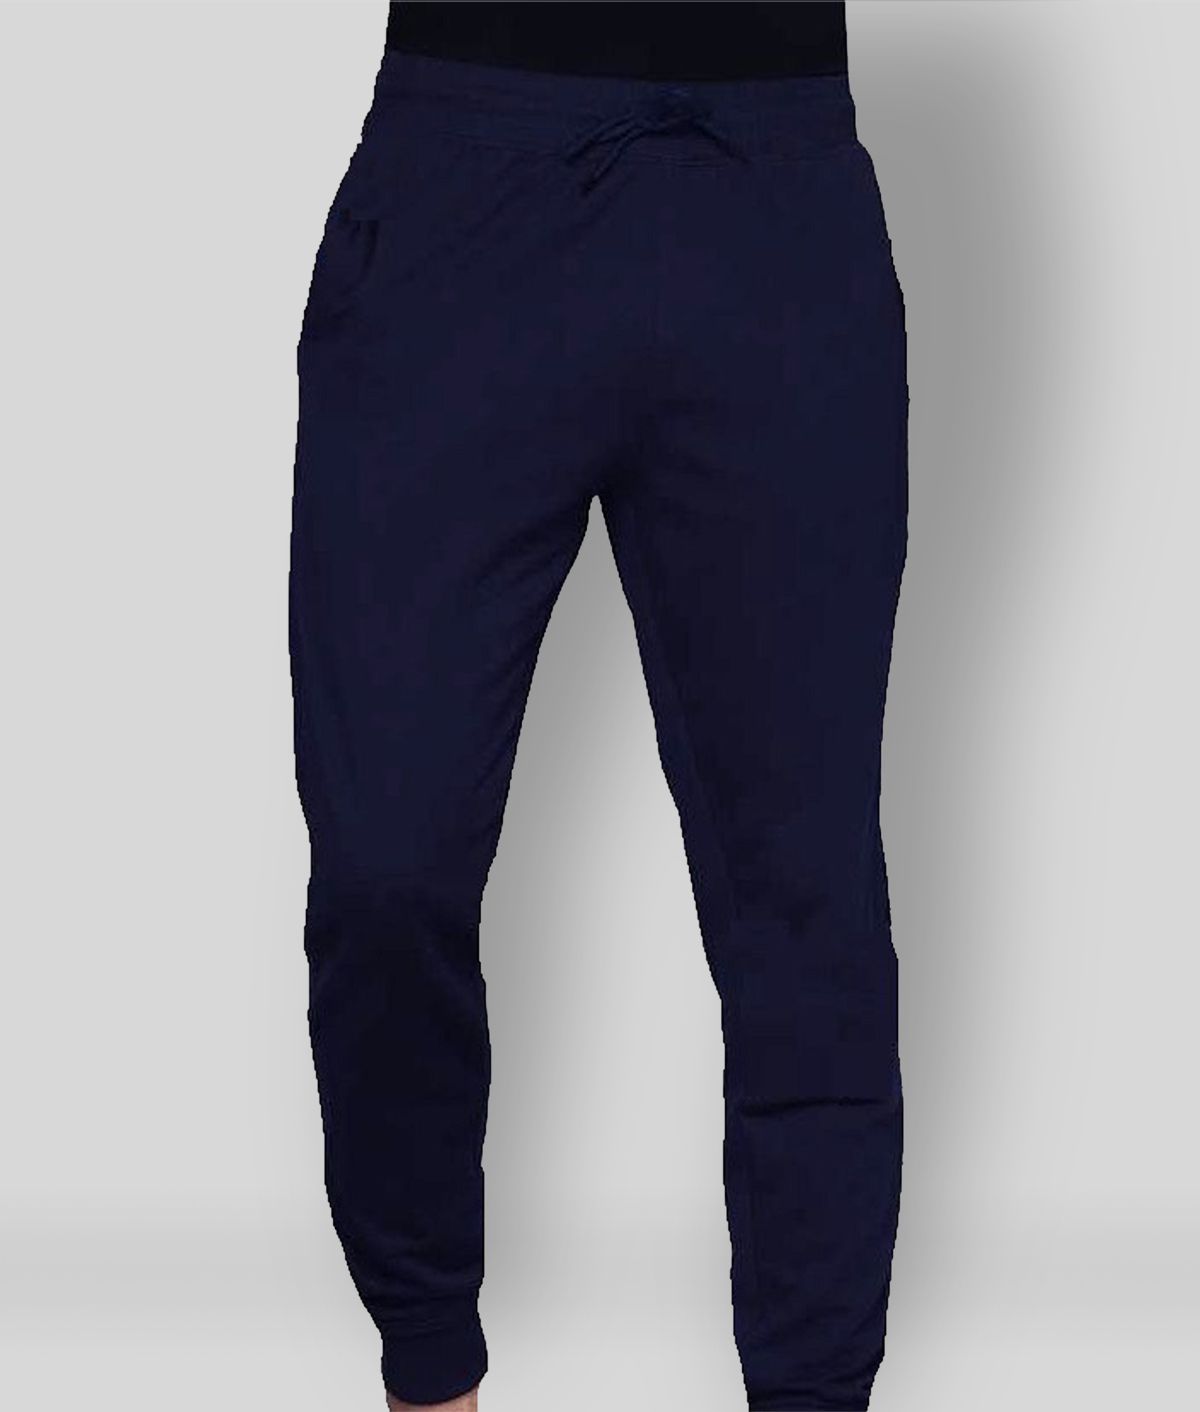 MRB - Blue Cotton Men's Trackpants ( Pack of 1 )